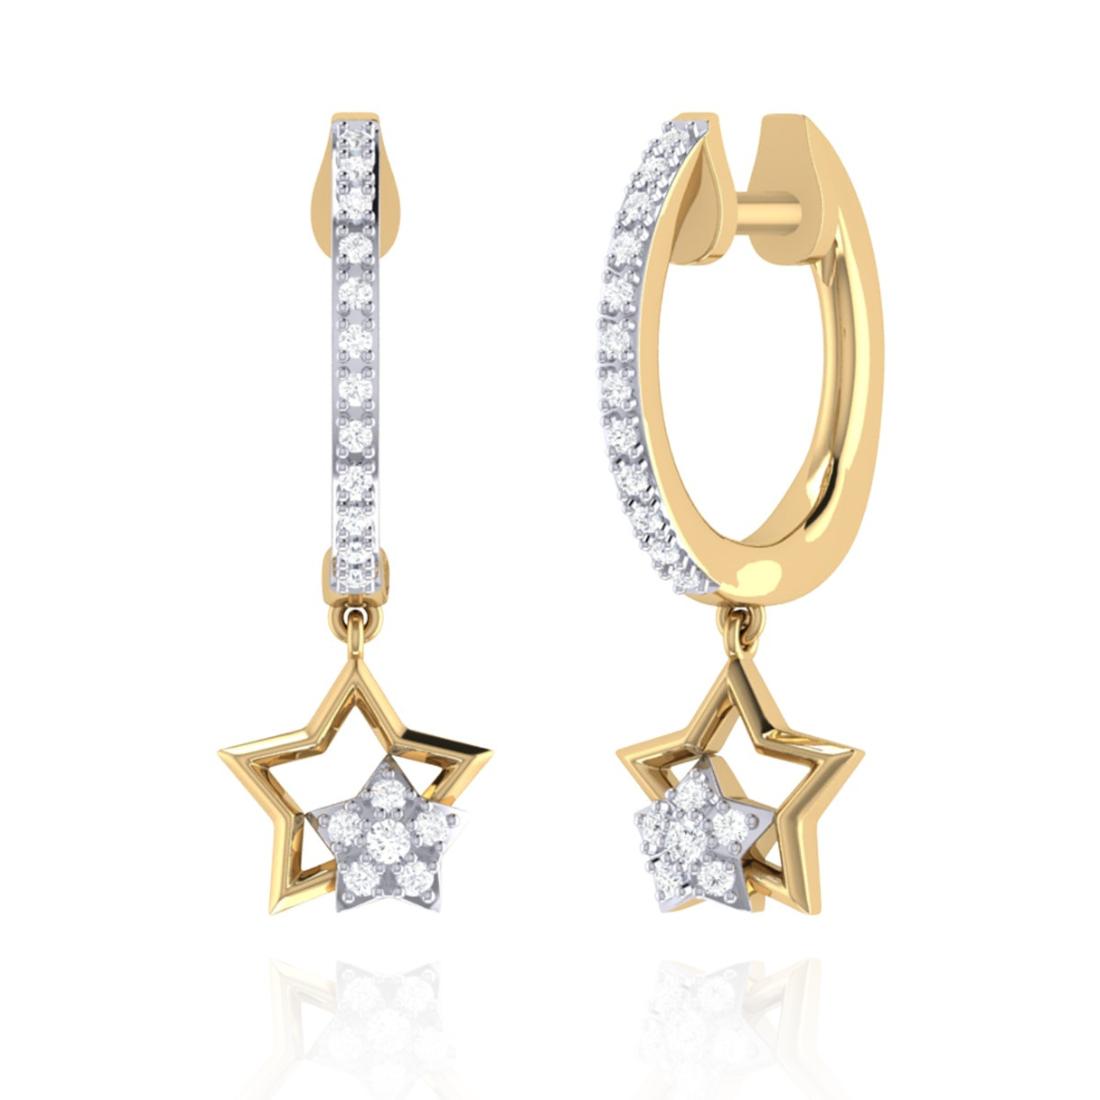 Diamond Hoop Earrings with dangling star charm